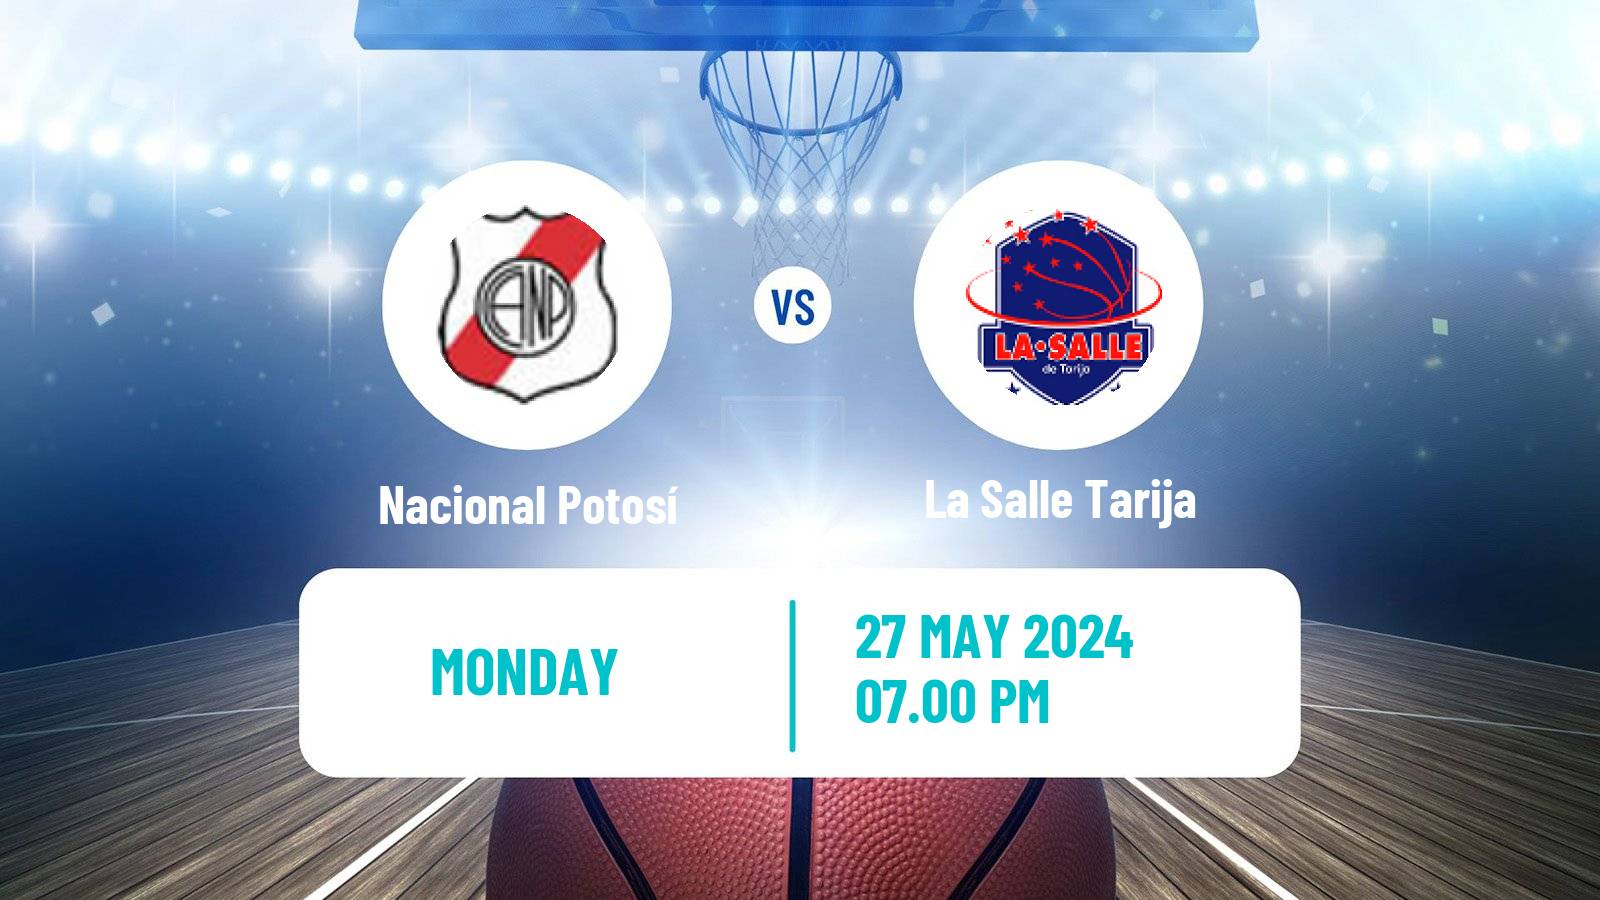 Basketball Bolivian Libobasquet Nacional Potosí - La Salle Tarija